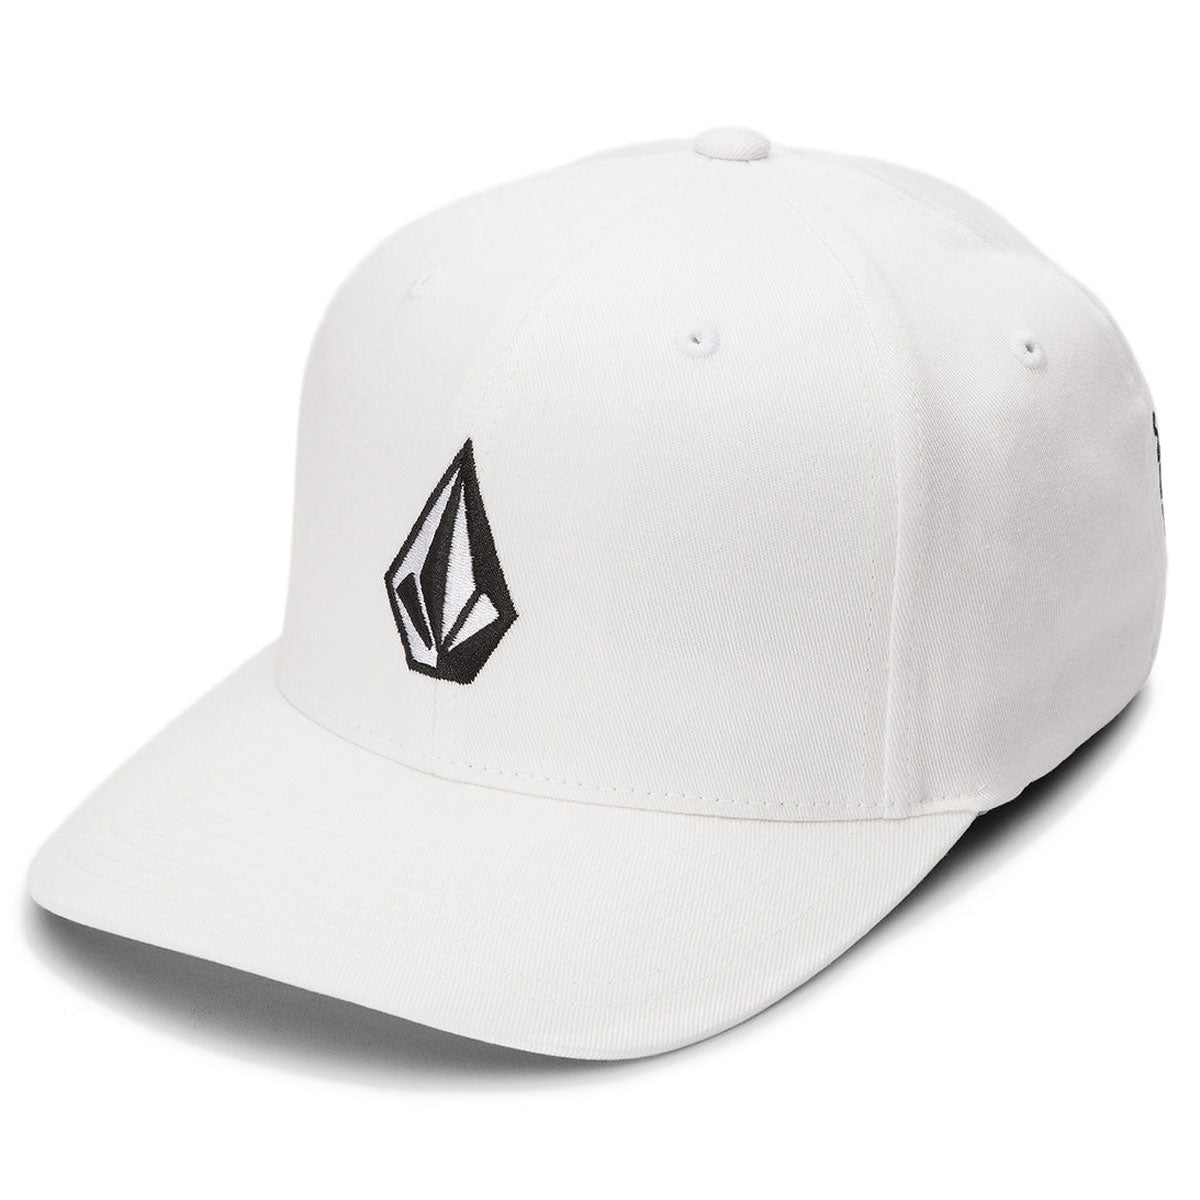 Volcom Full Stone Flexfit Hat - White image 1